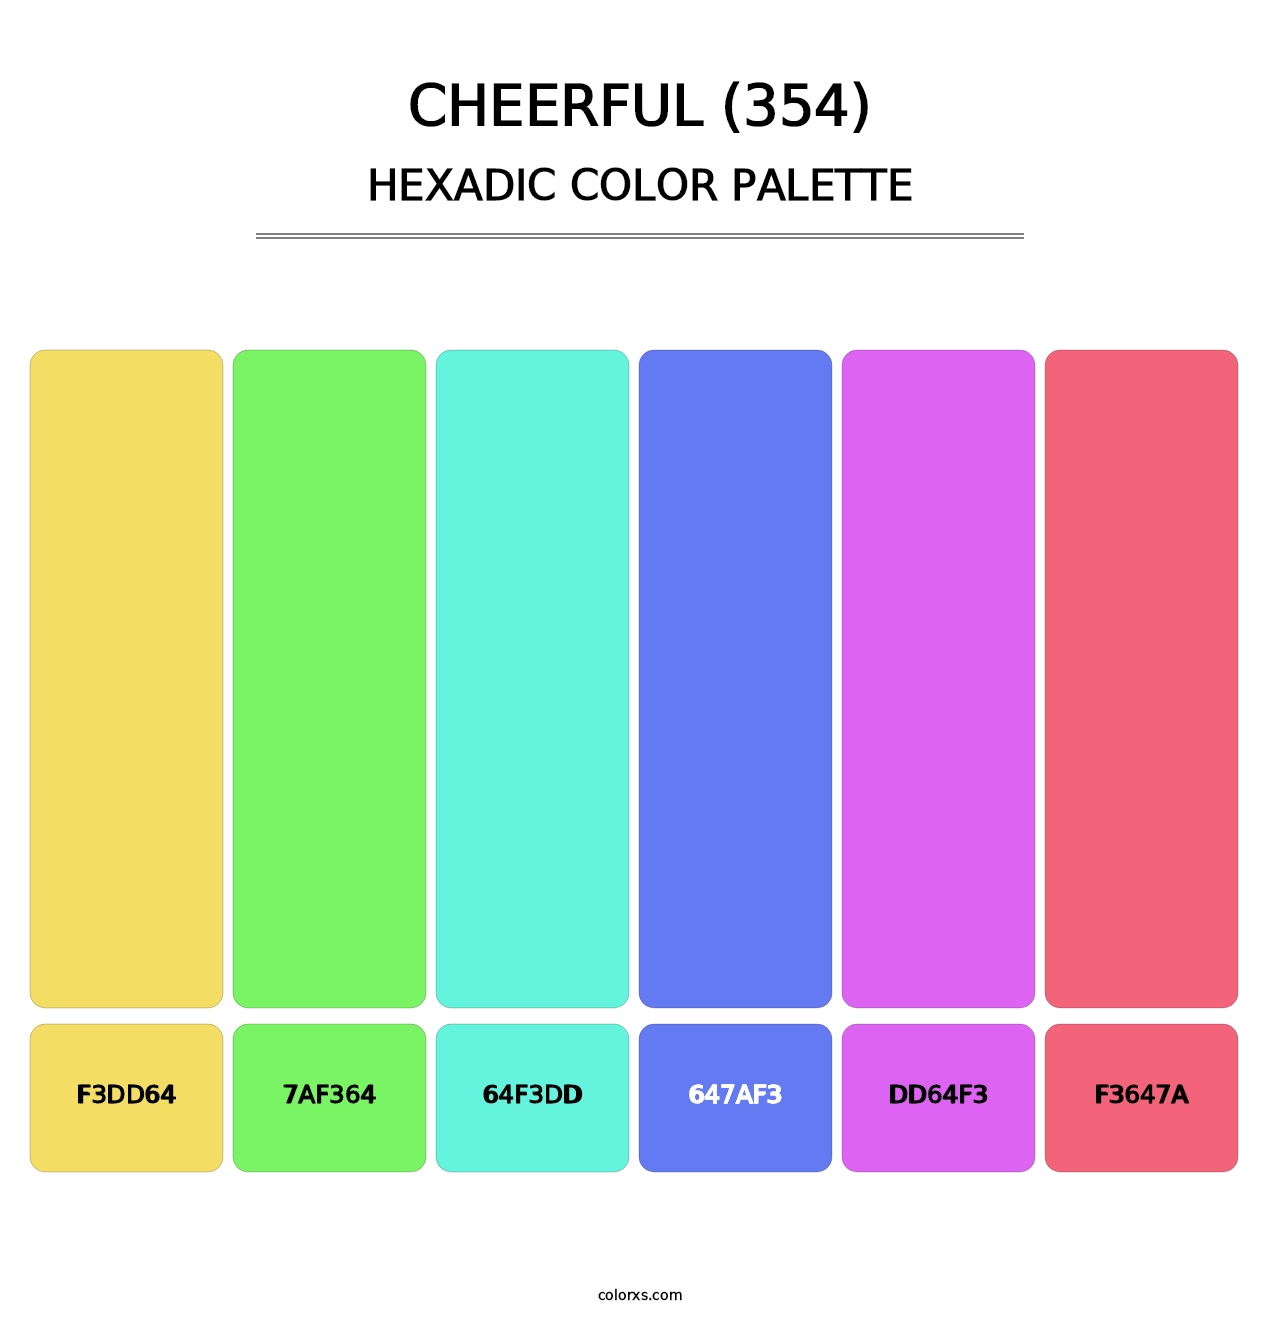 Cheerful (354) - Hexadic Color Palette